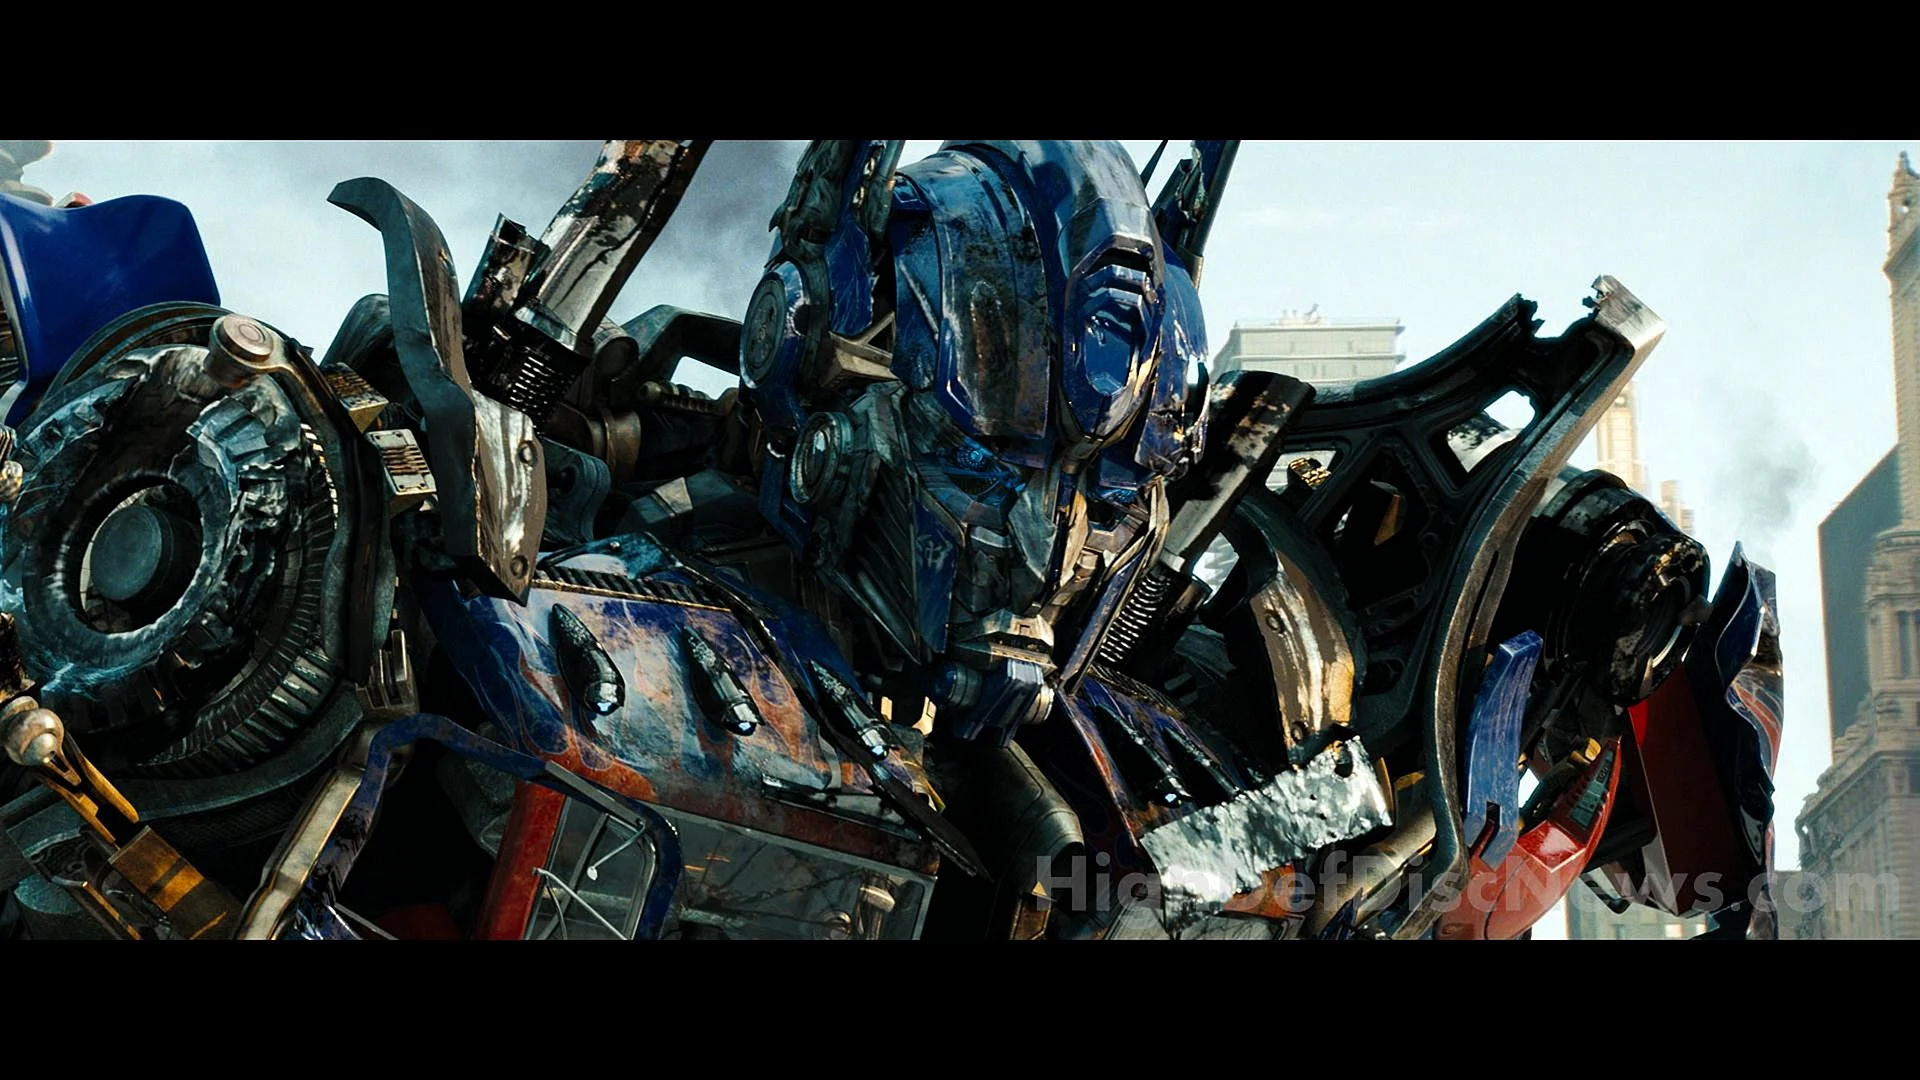 Optimus Prime Vs Megatron Transformers 3 Wallpaper